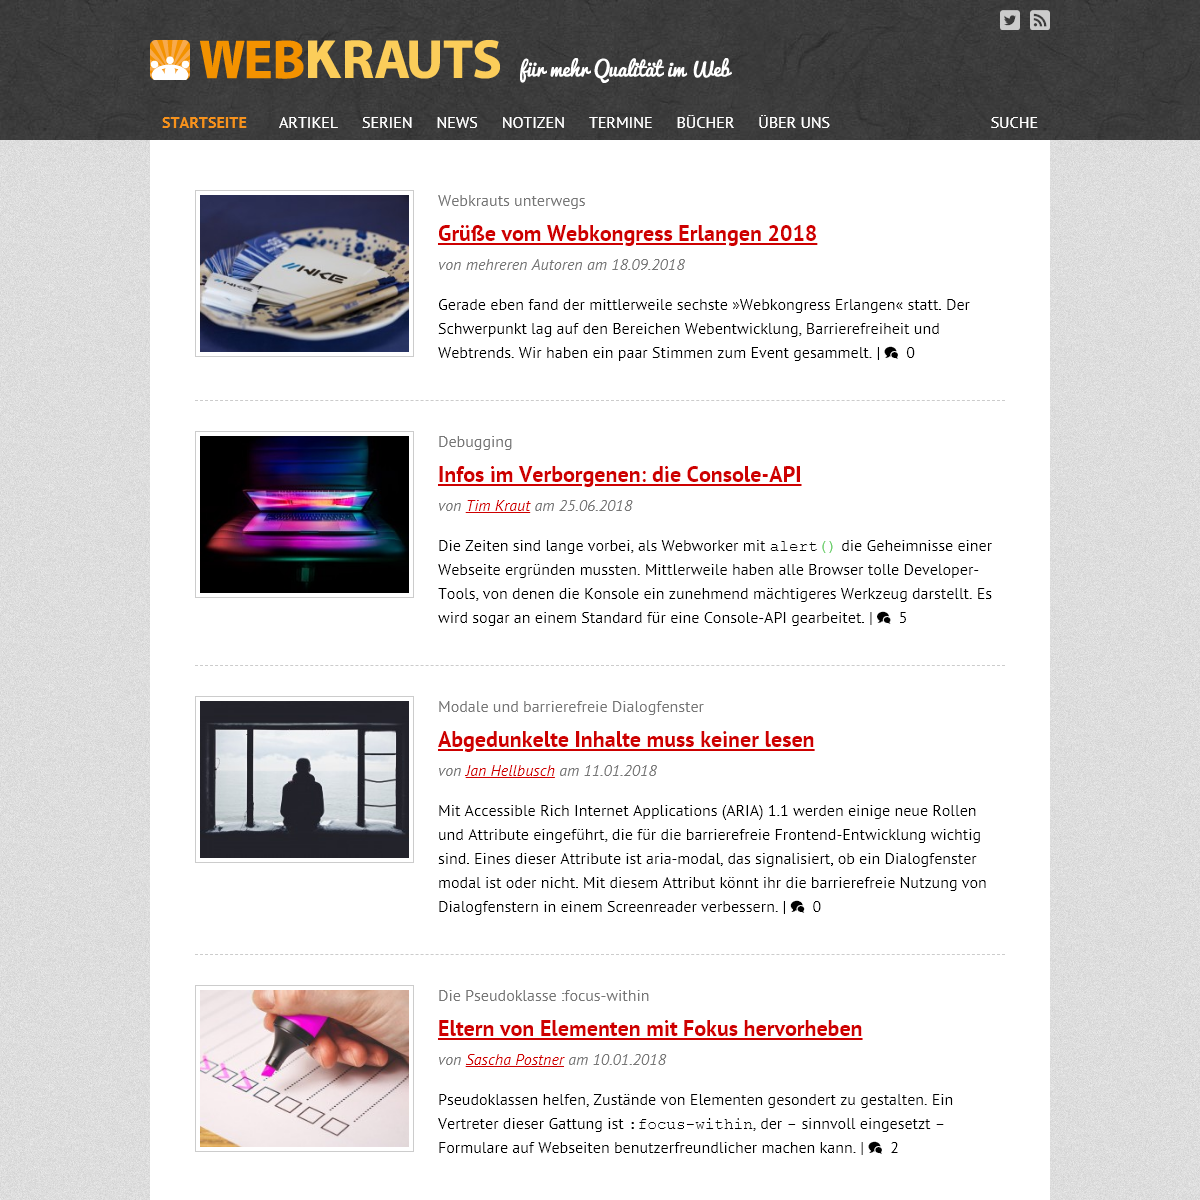 A complete backup of webkrauts.de